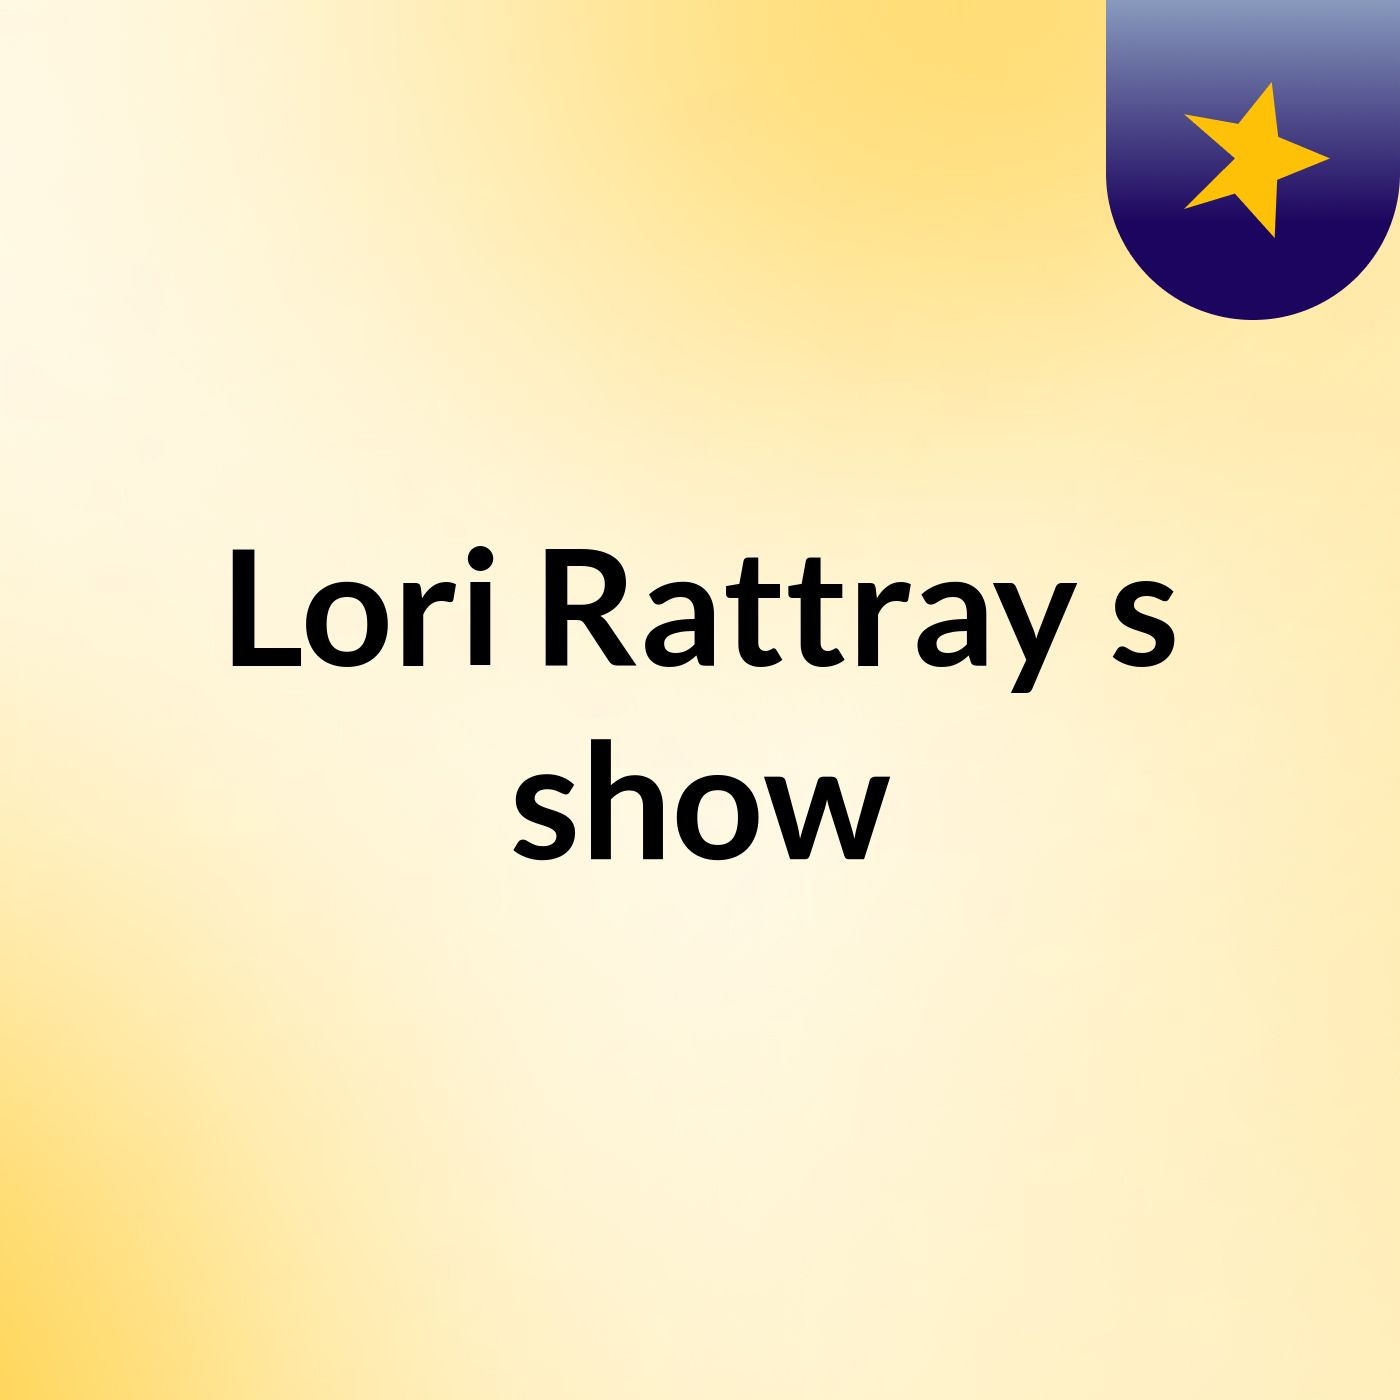 Lori Rattray's show